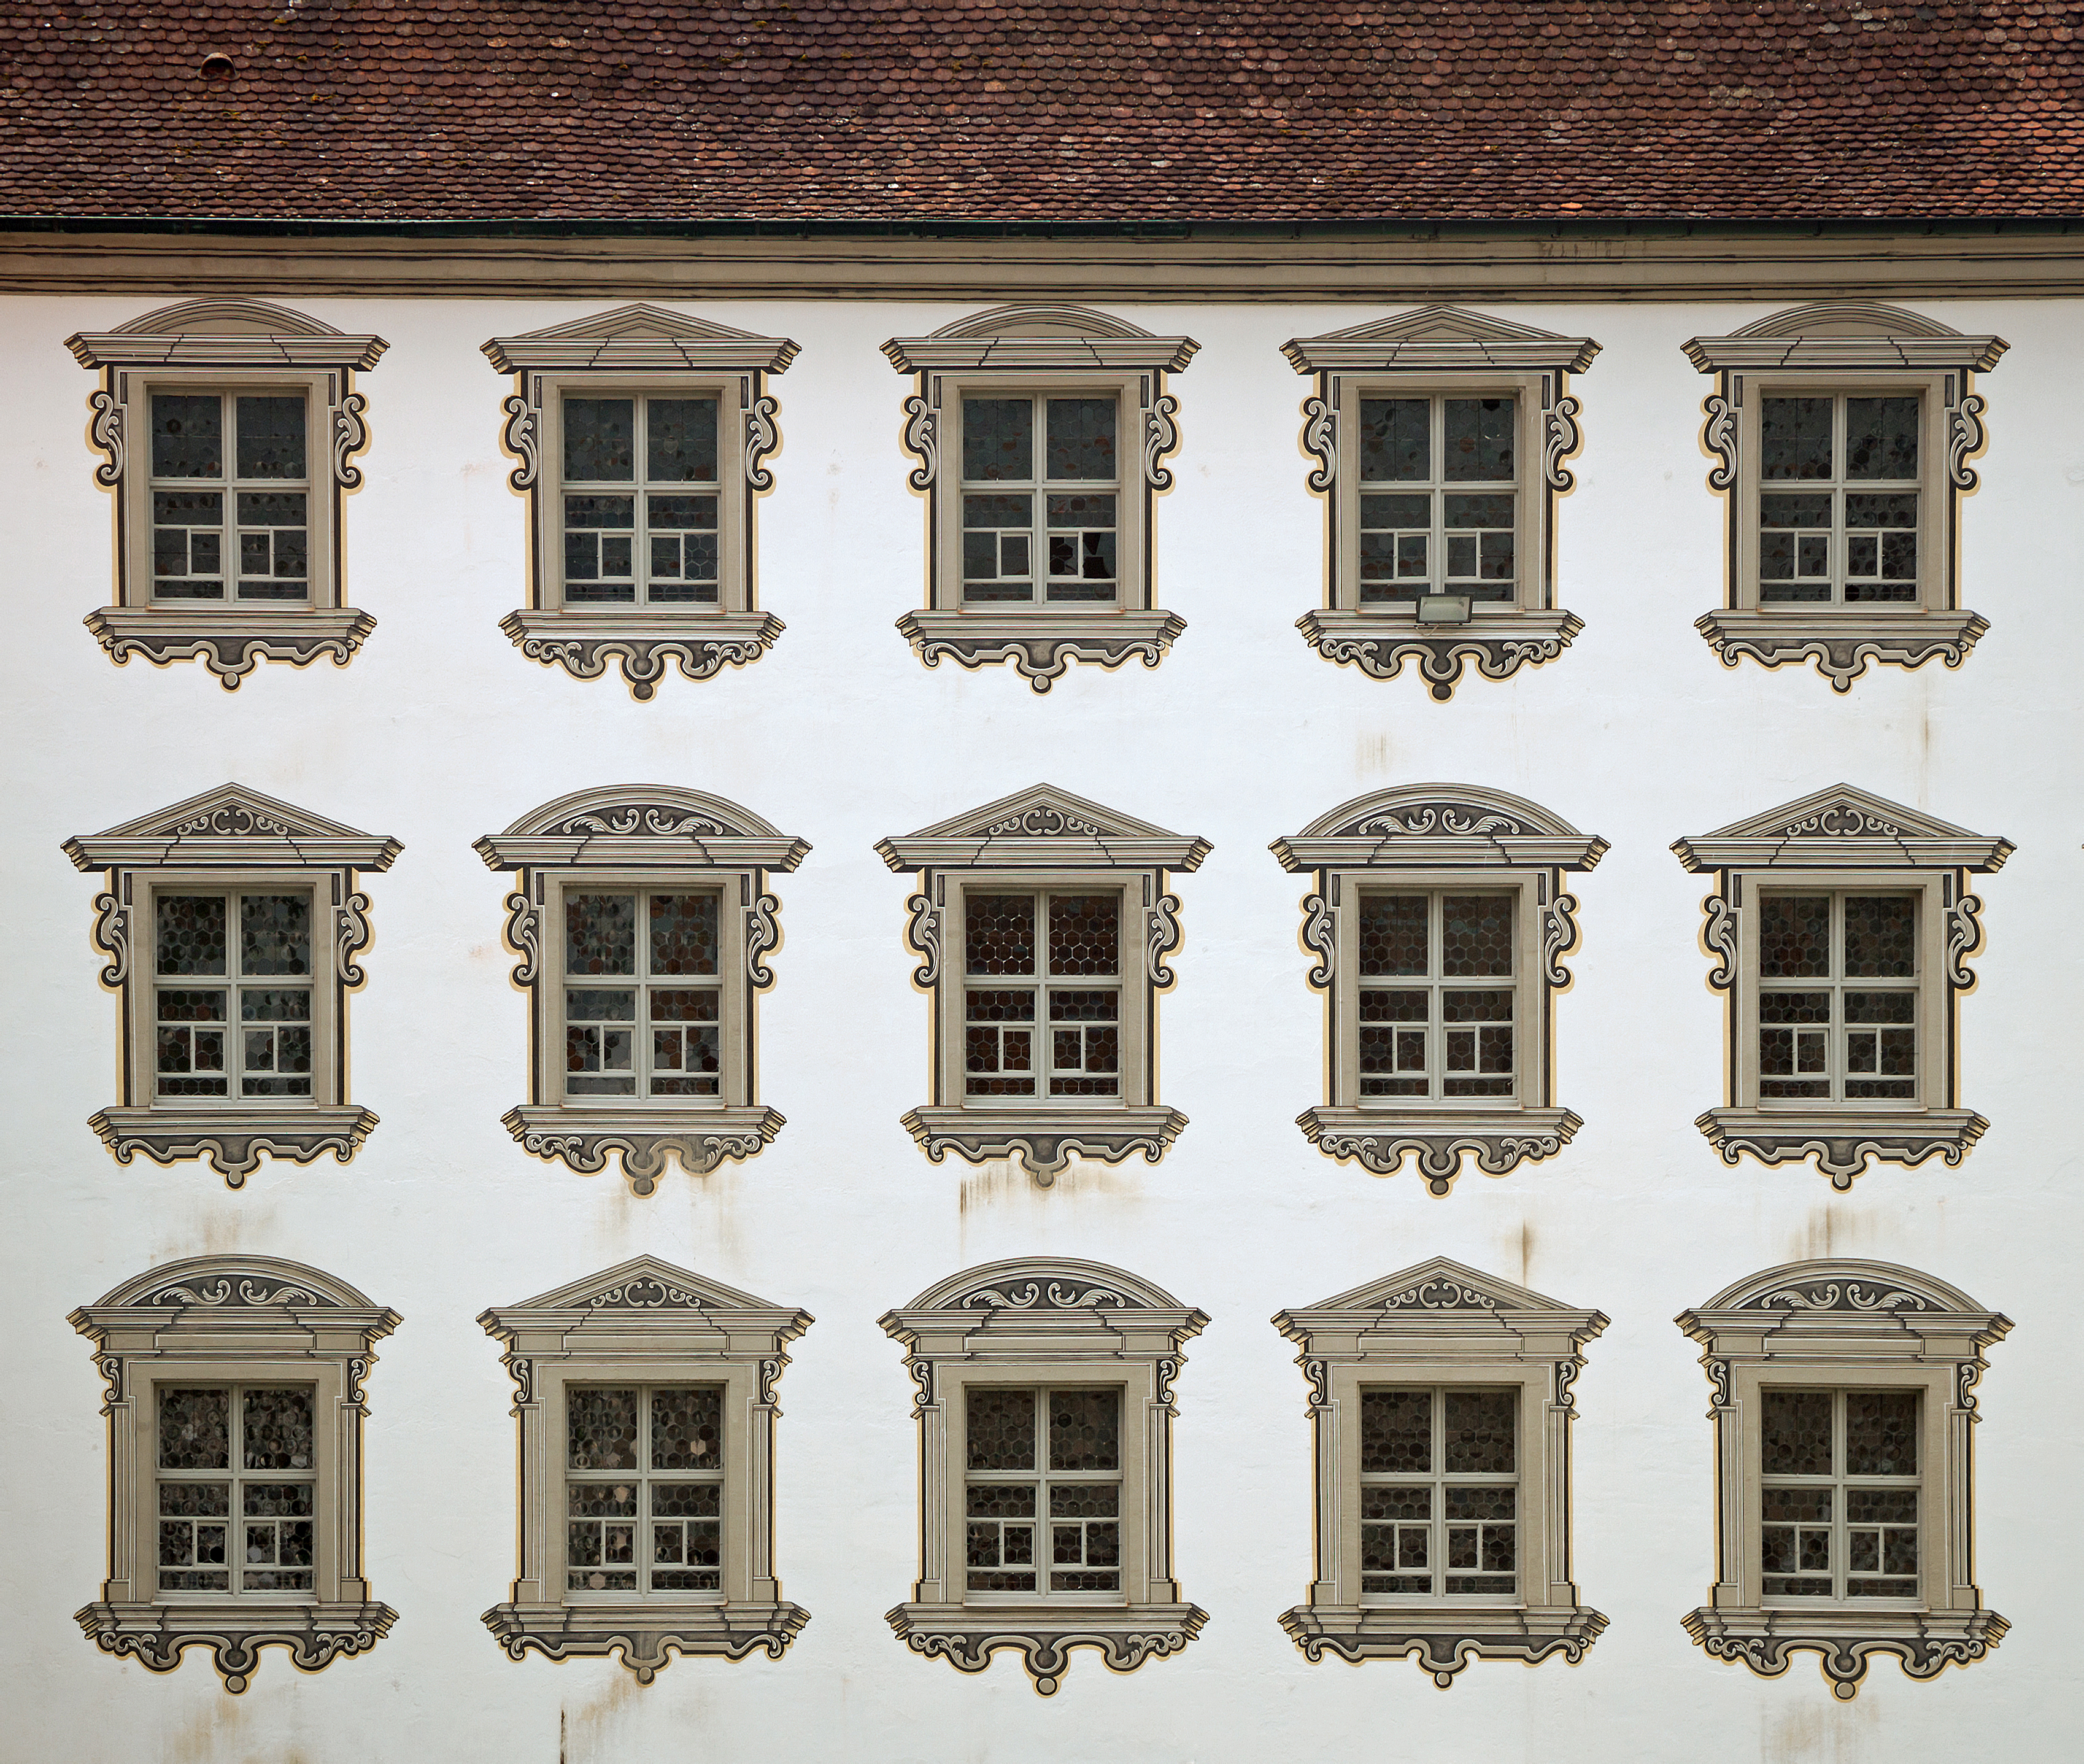 Salem Abbey - courtyard - facade